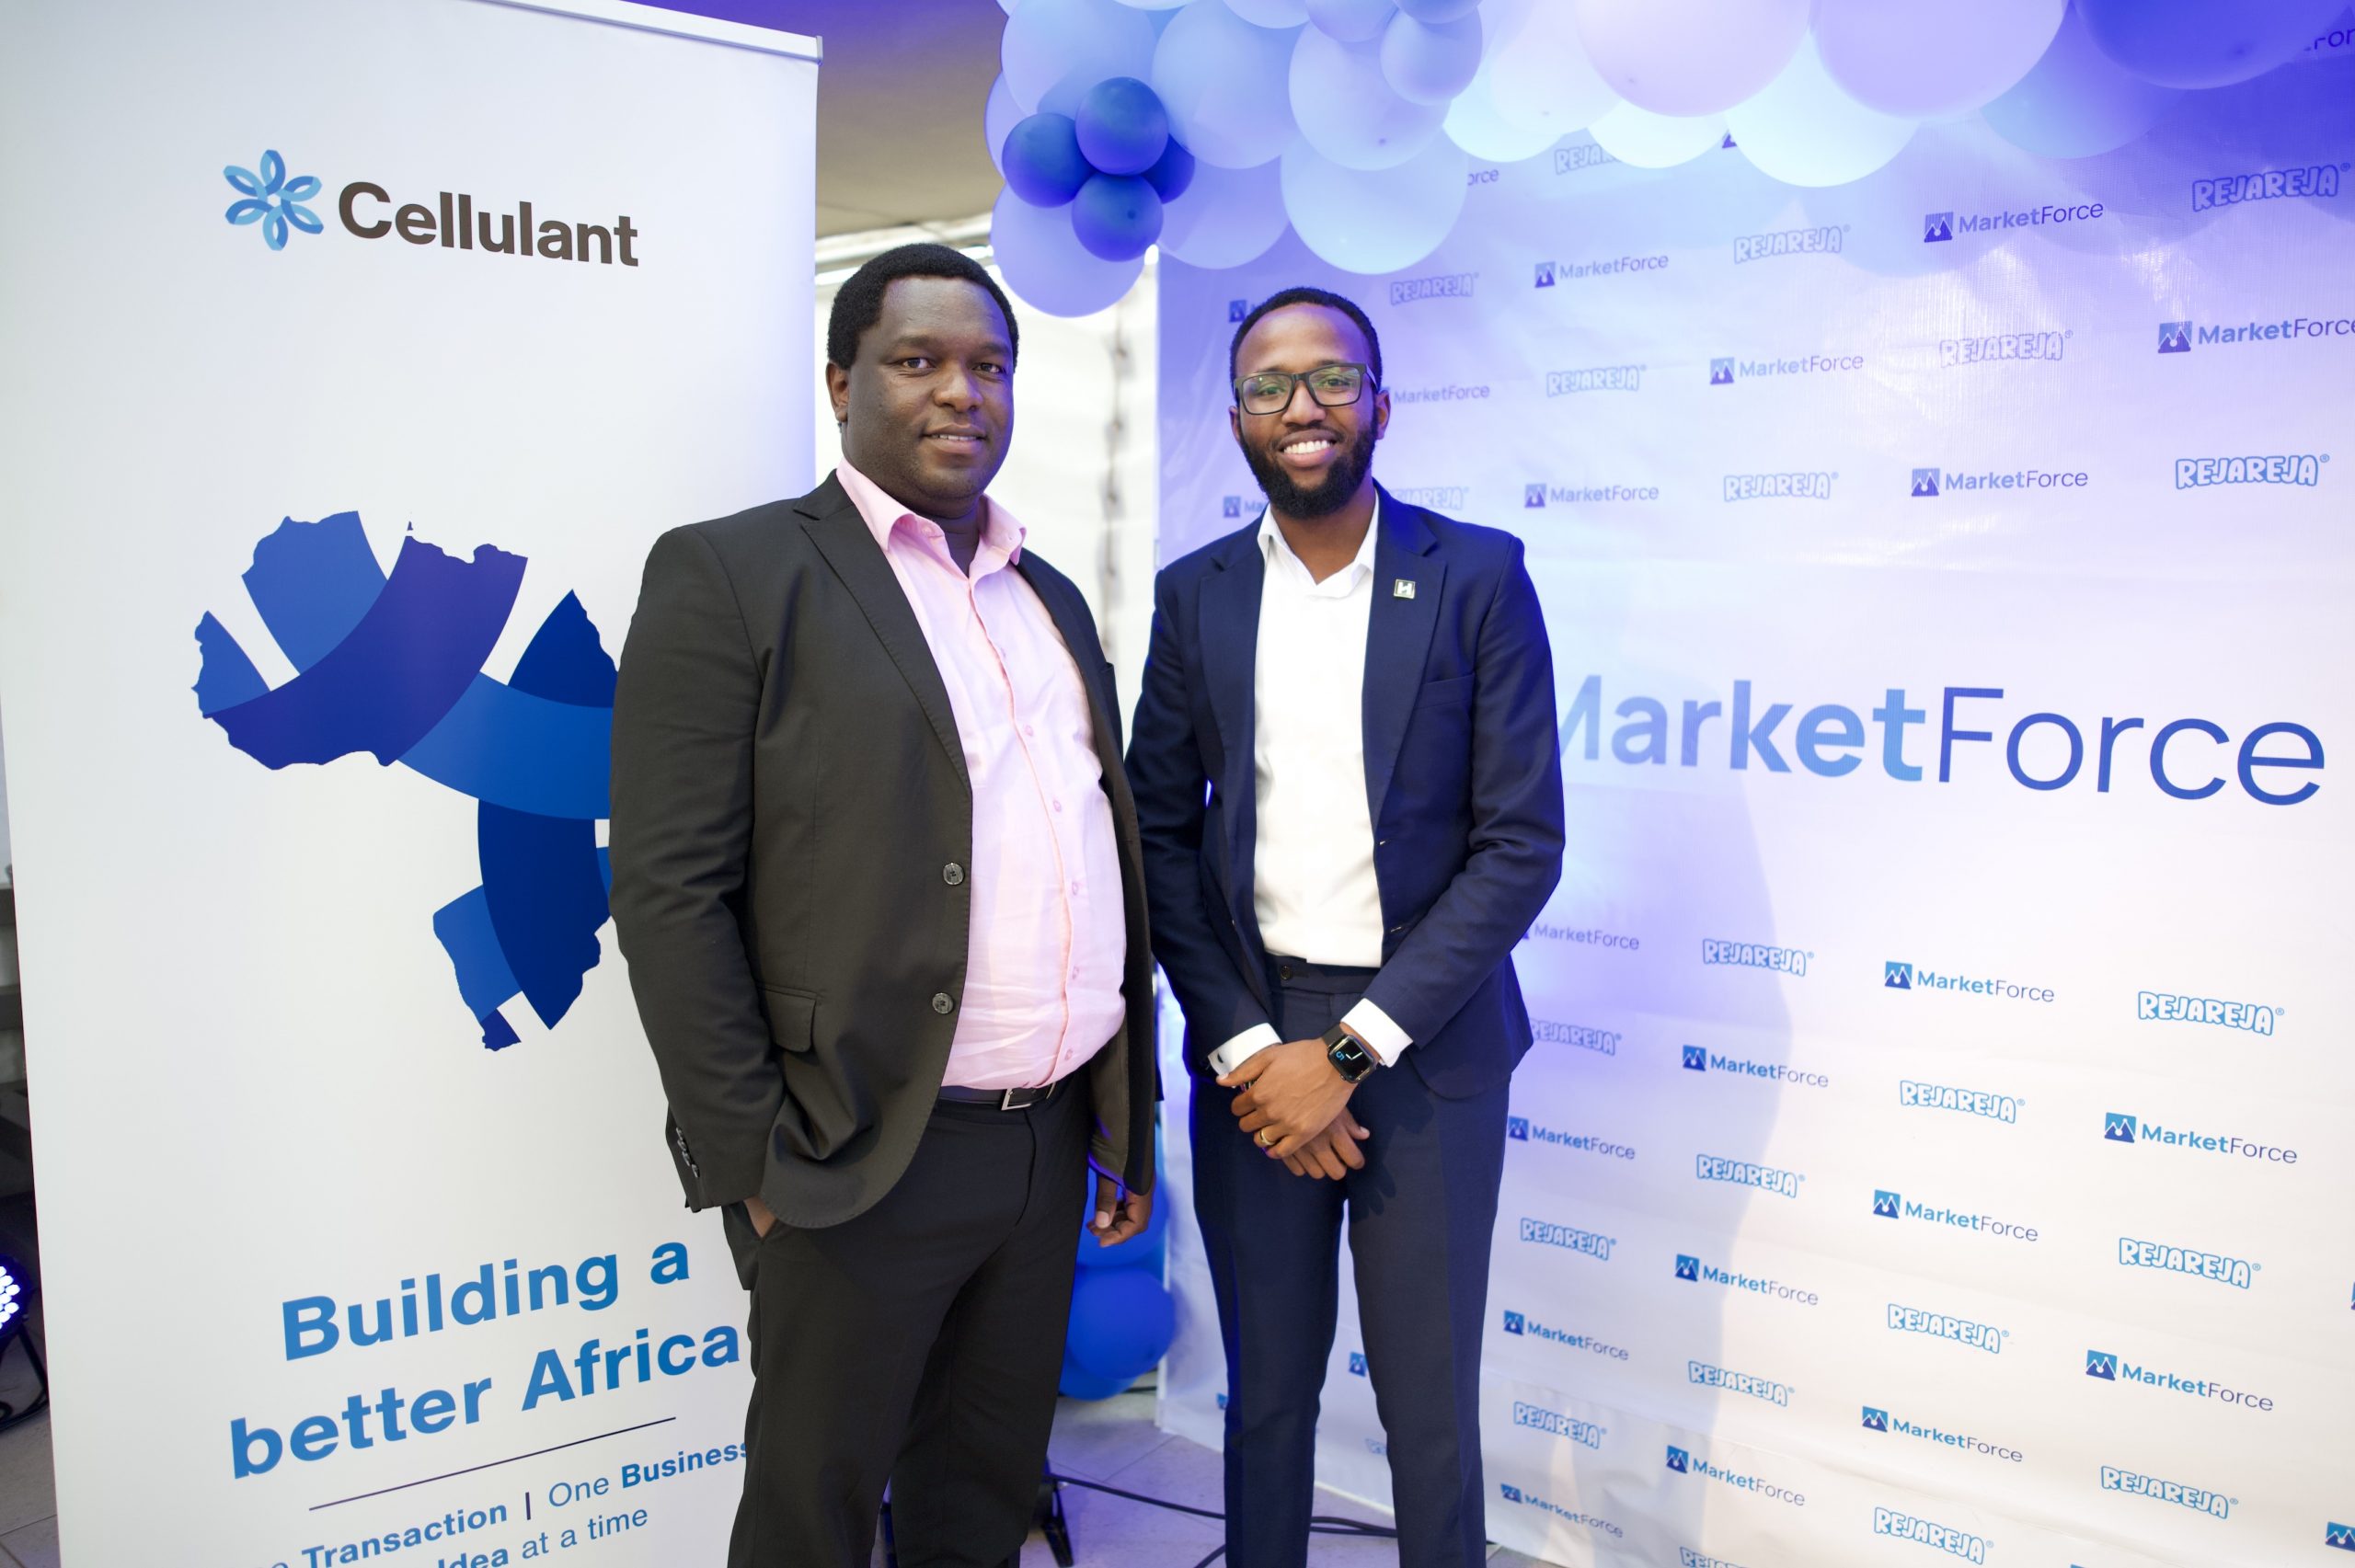 Kenya’s MarketForce expanding to 5 more markets via Cellulant partnership